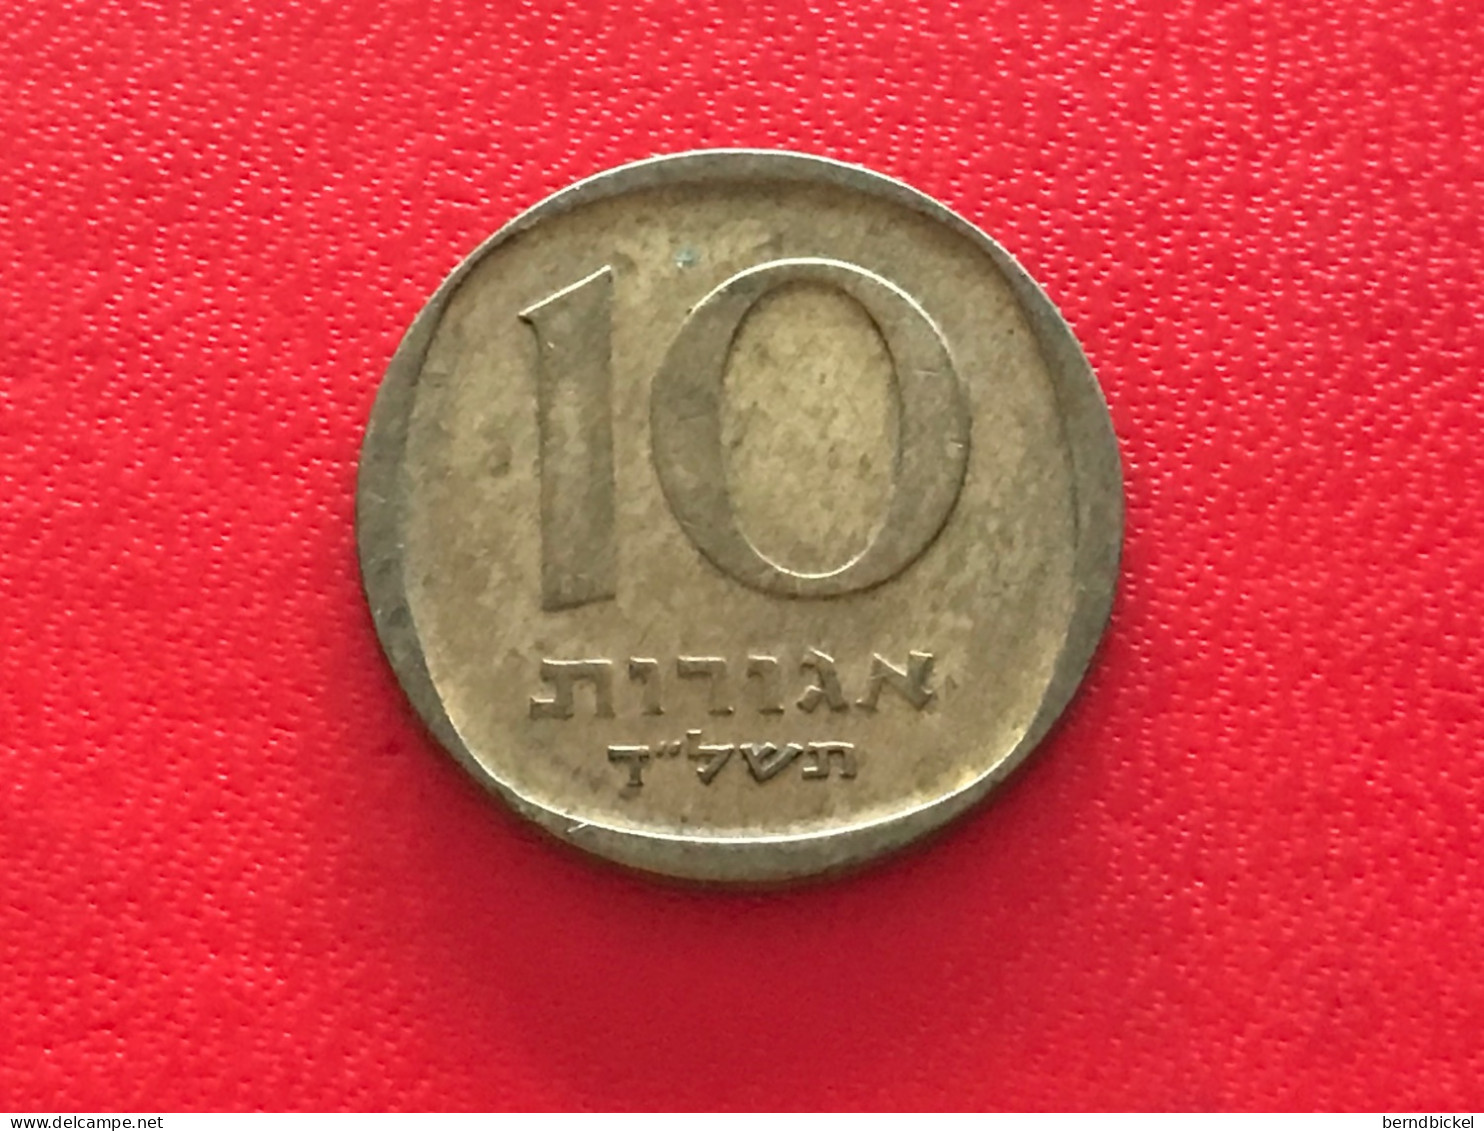 Münze Münzen Umlaufmünze Israel 10 Agorot 1974 - Israel